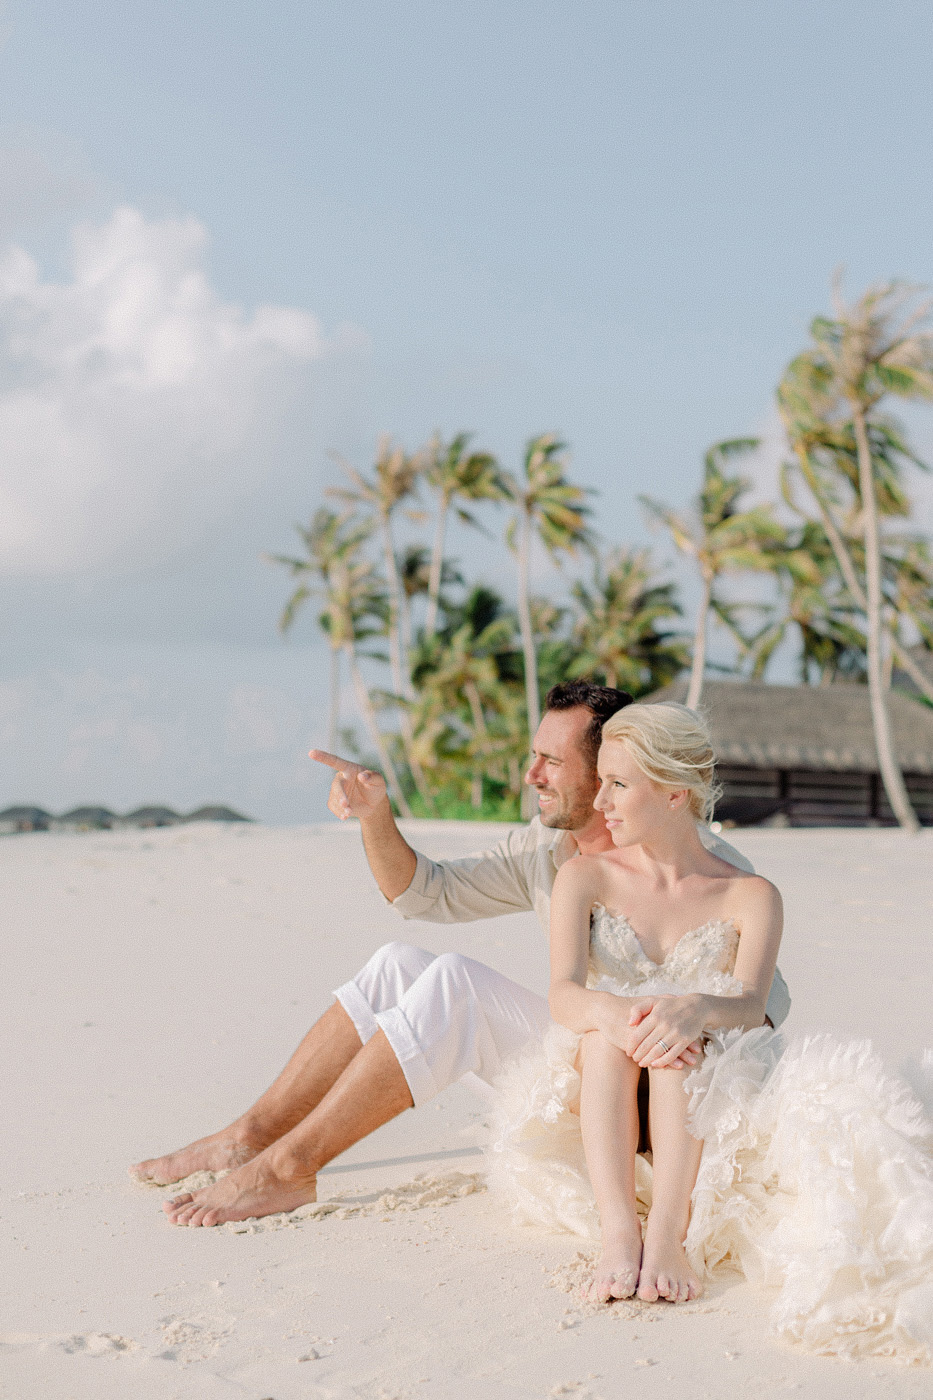 maldives wedding photographer captures couple enjoying the beach after their wedding ceremony